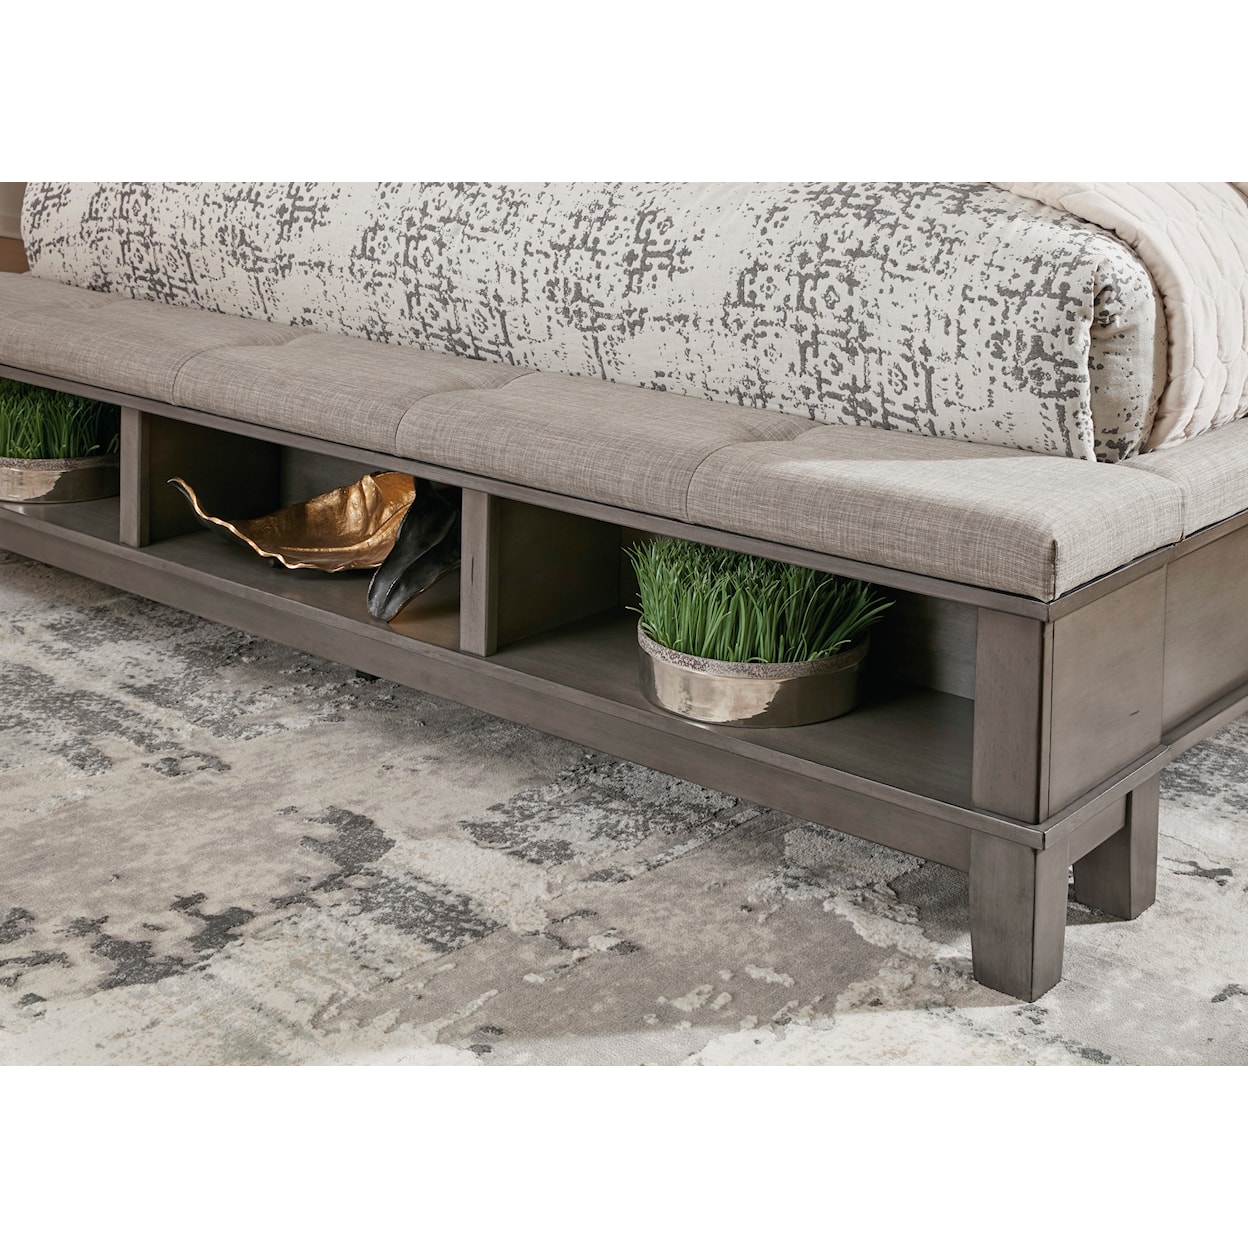 Ashley Furniture Benchcraft Hallanden King Panel Bed with Storage